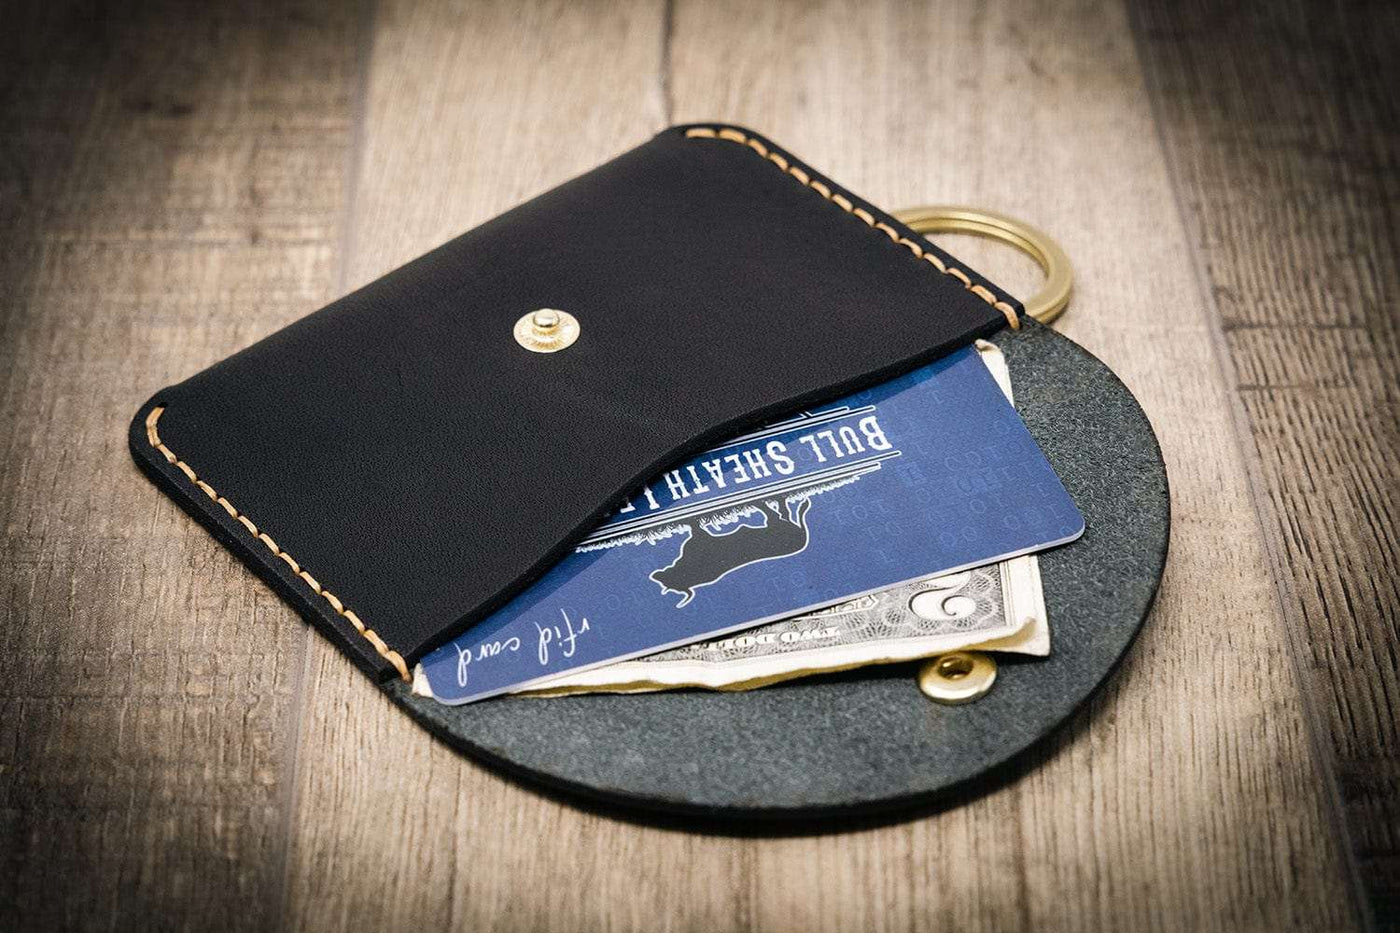 Keychain Leather Wallet - The Richmond - Black